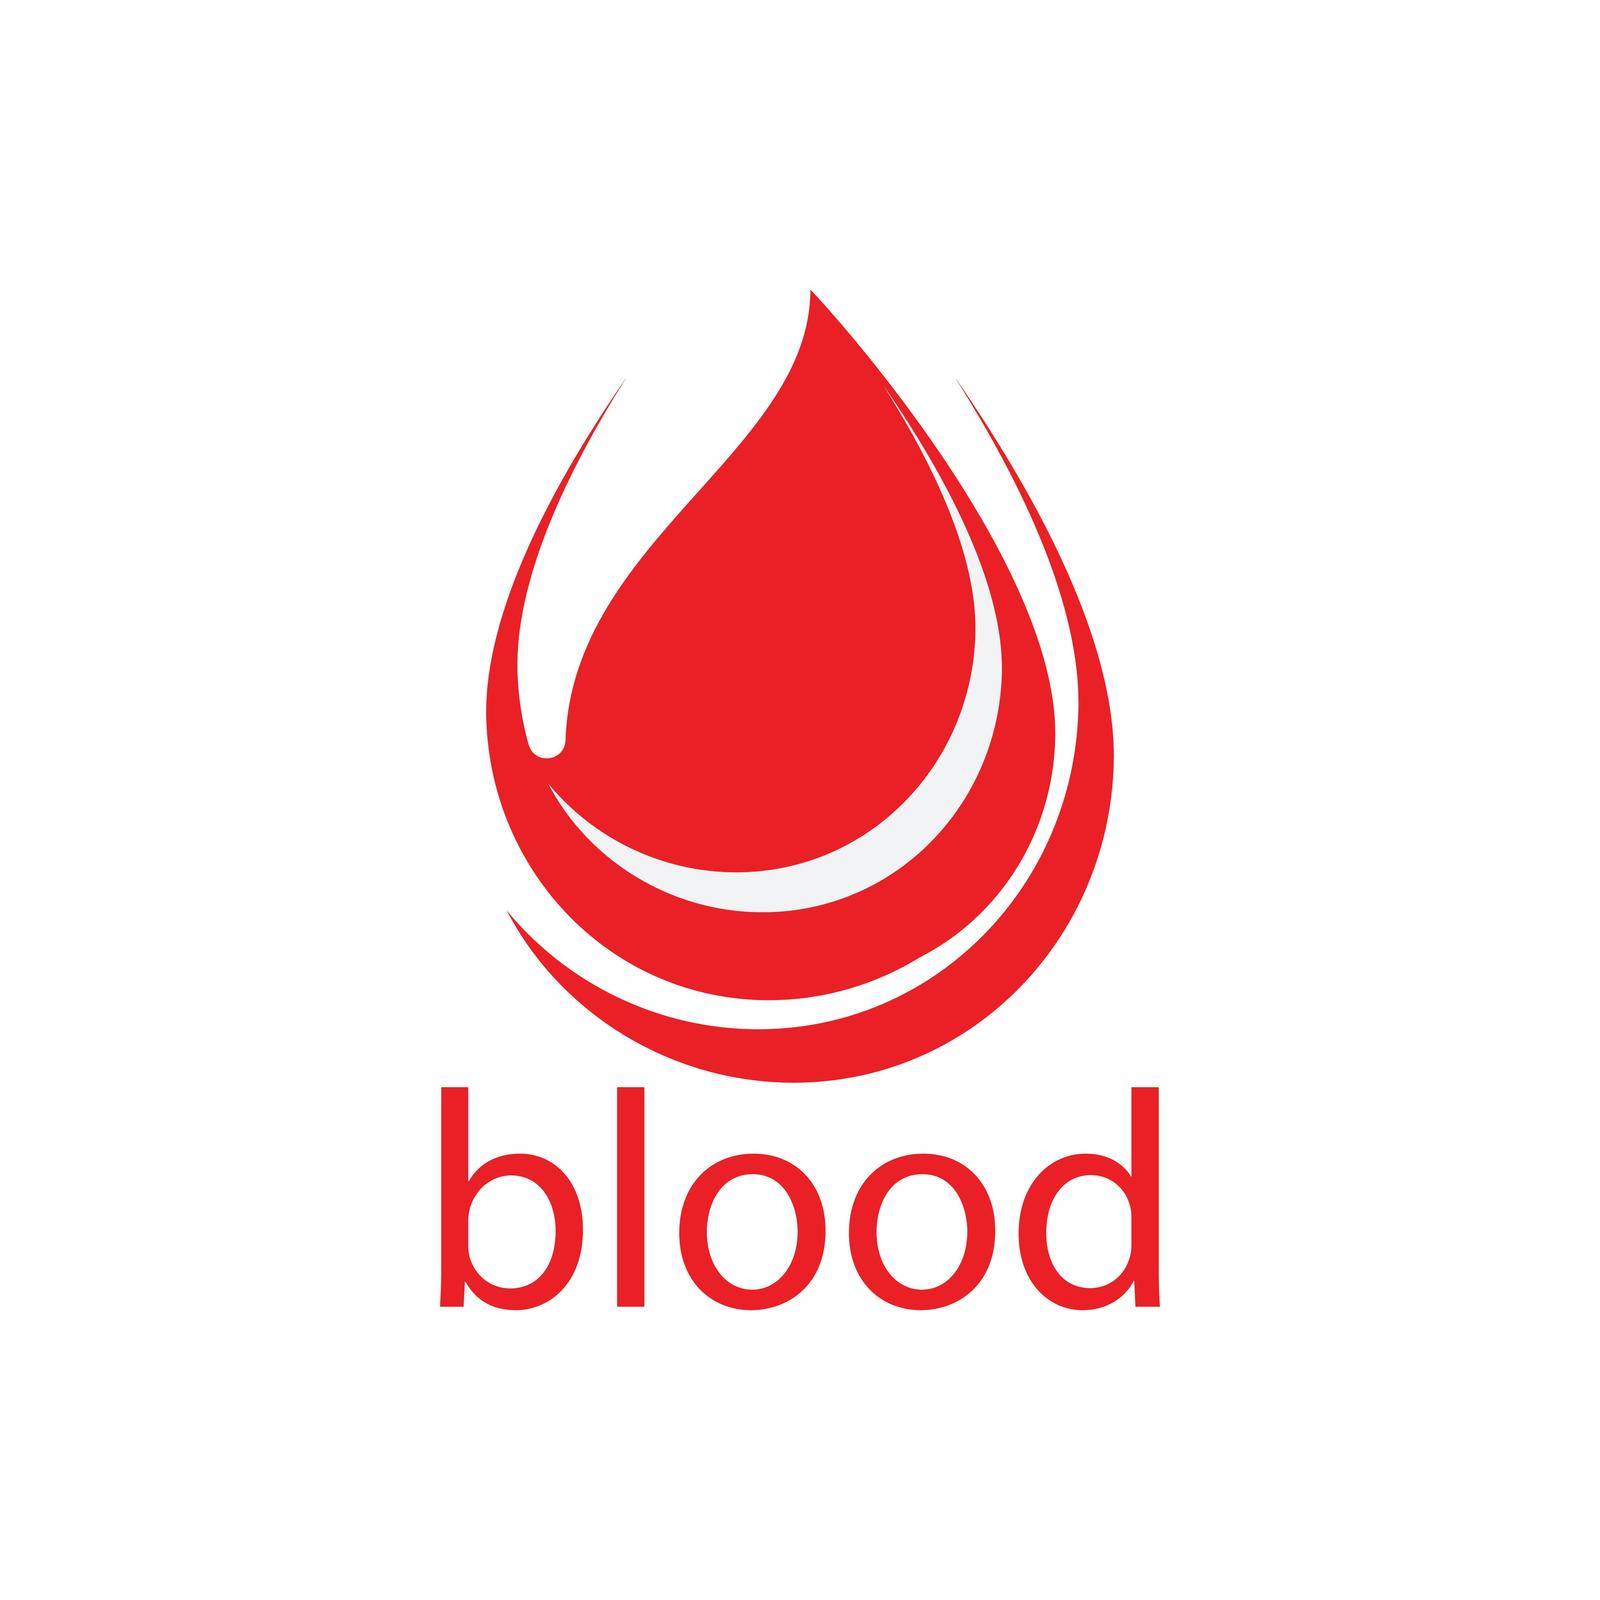 Blood ilustration logo by hasan02